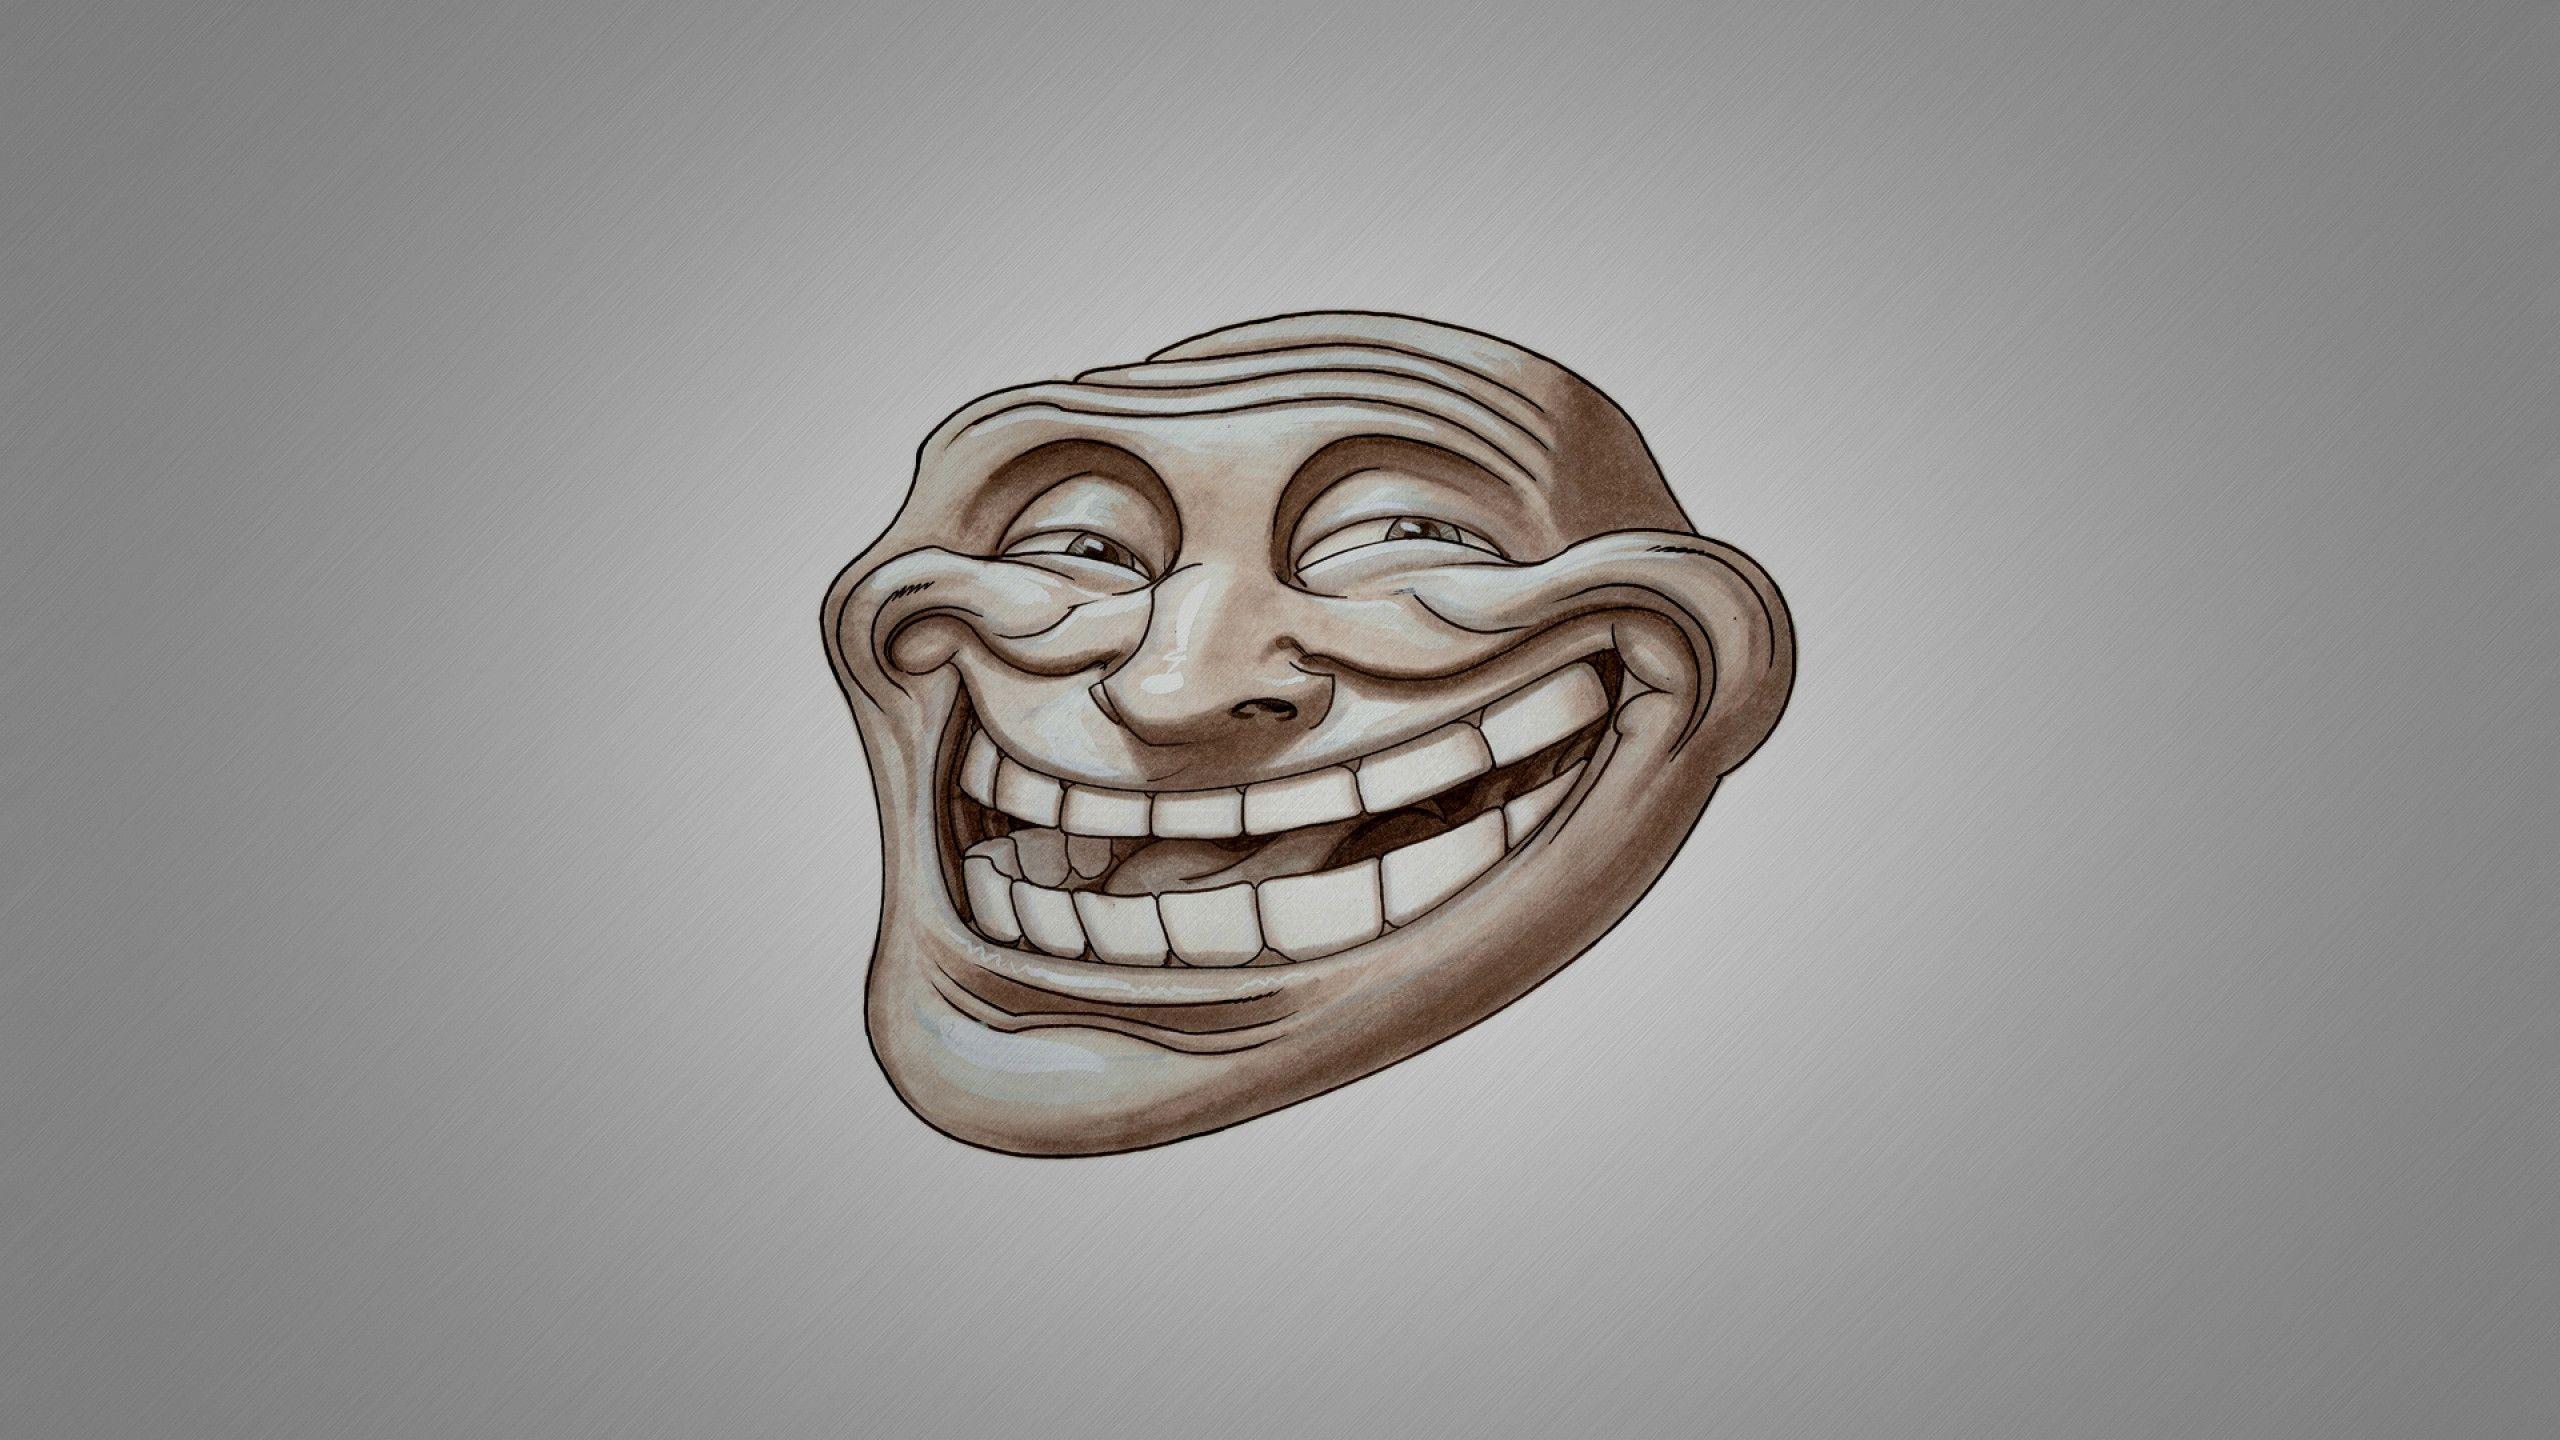 Download Wallpaper 2560x1440 troll, face, smile Mac iMac 27 HD